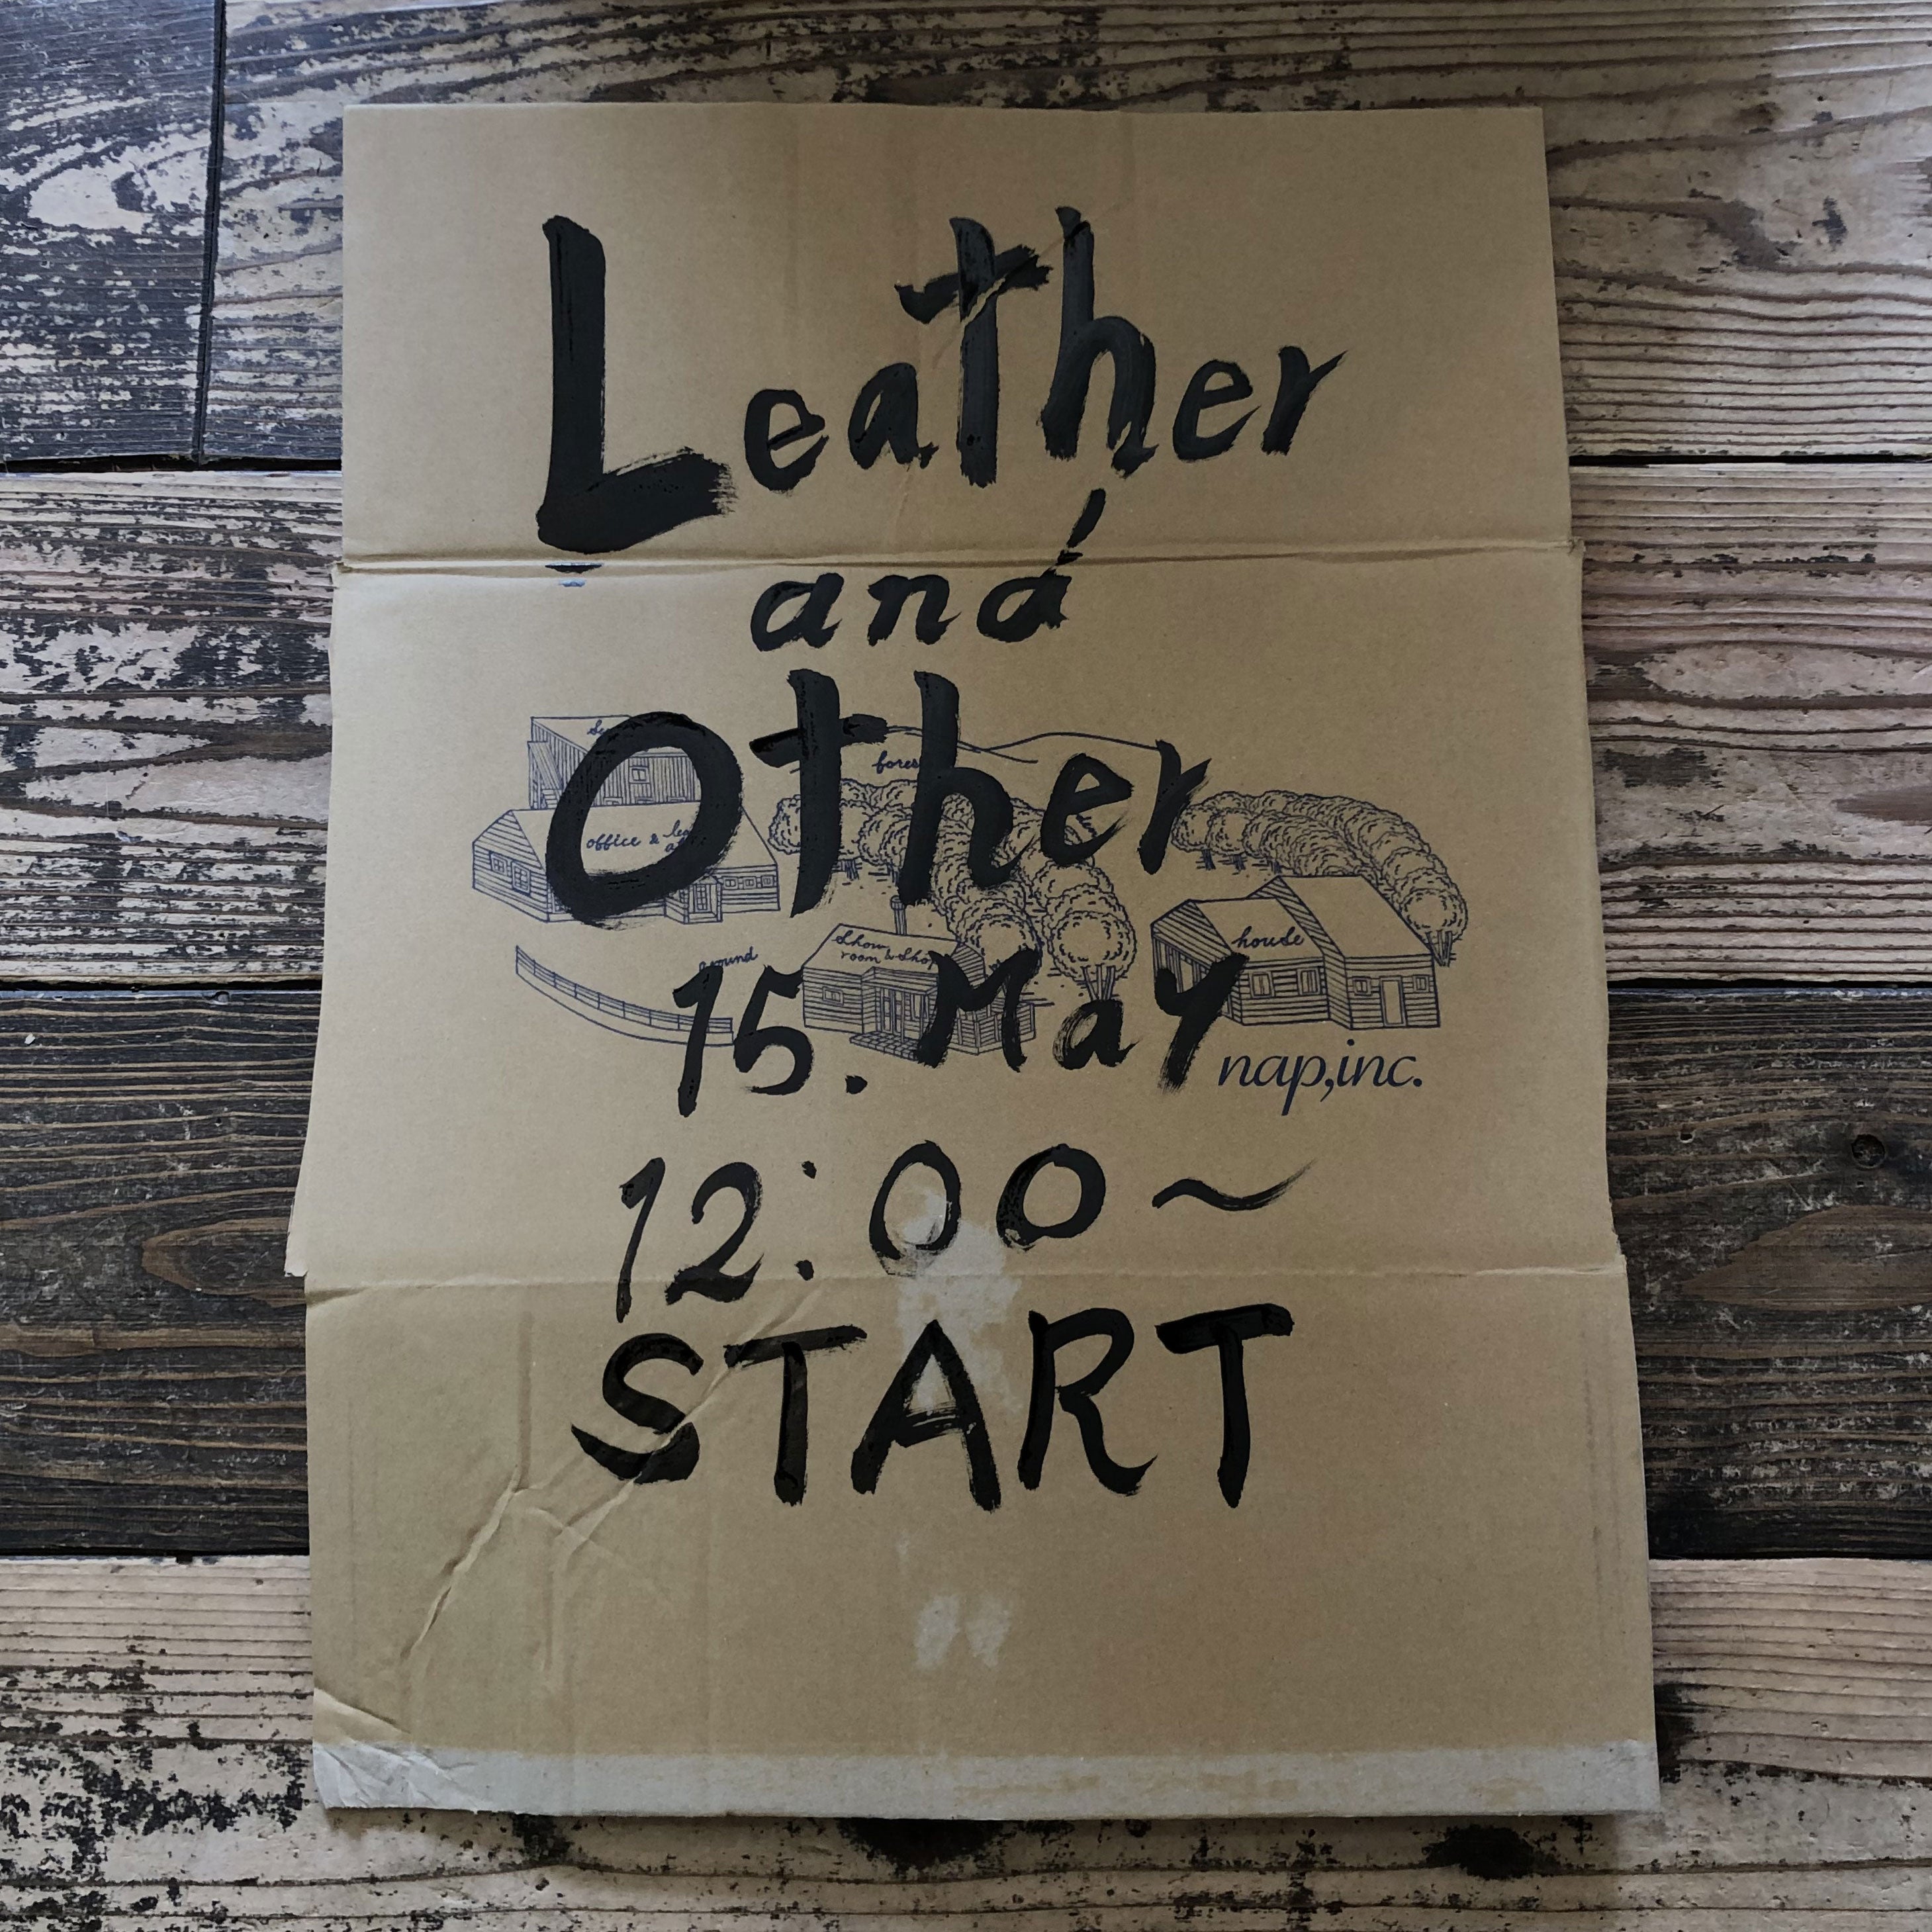 「Leather and Other」サンプルセールのお知らせ